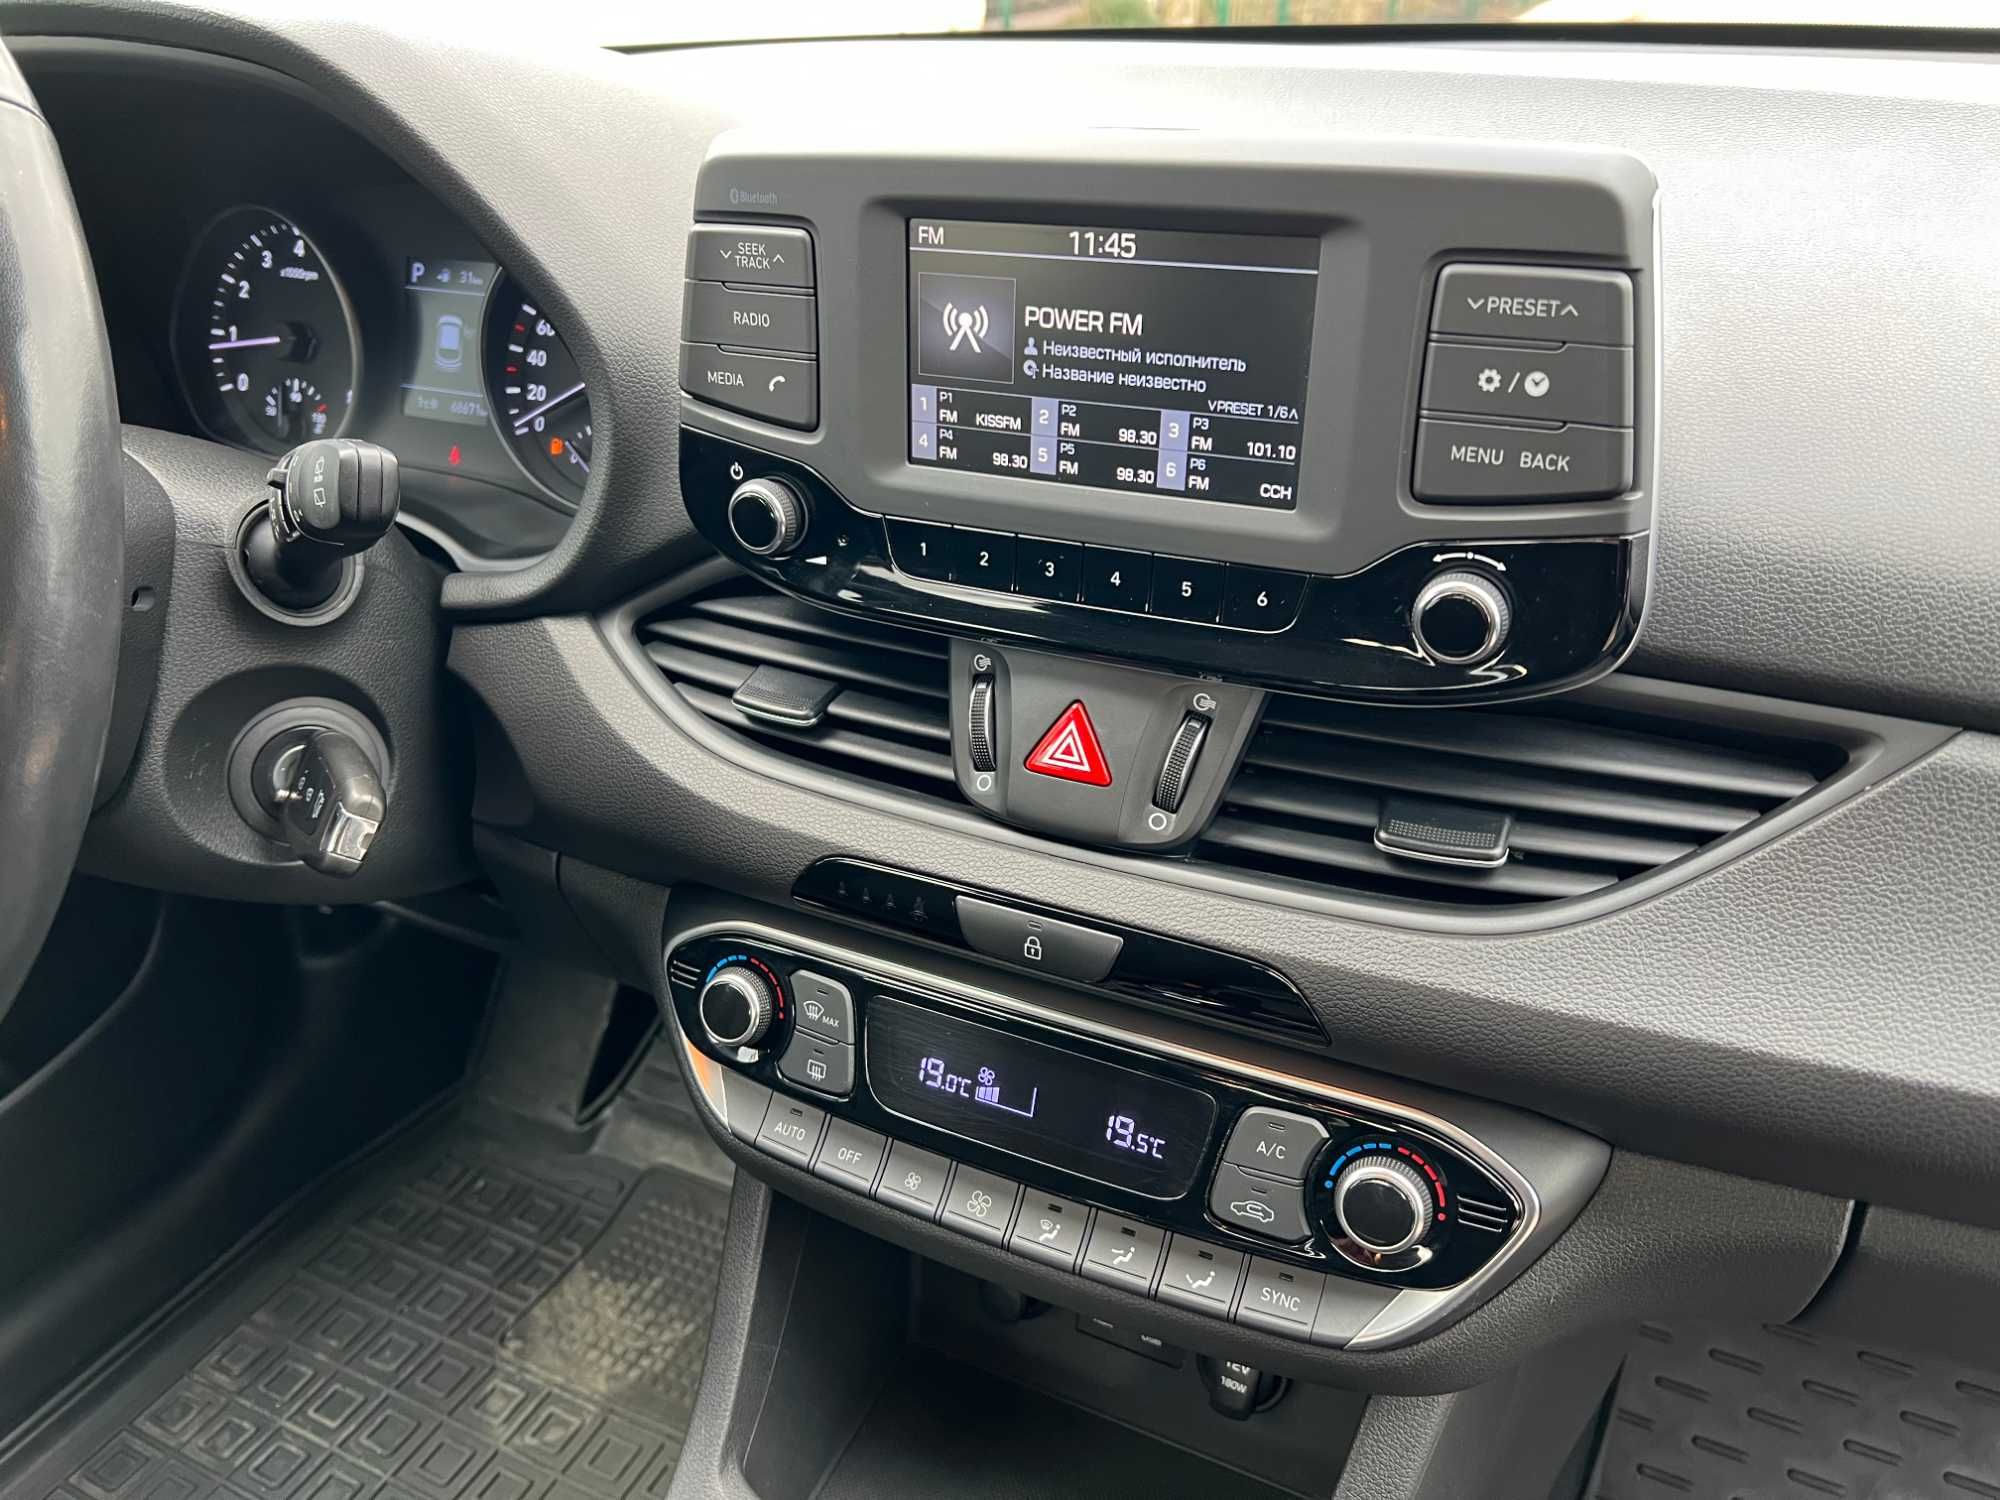 Hyundai  i30  2019р. 1.6АТ.  Офіційна версія!!!